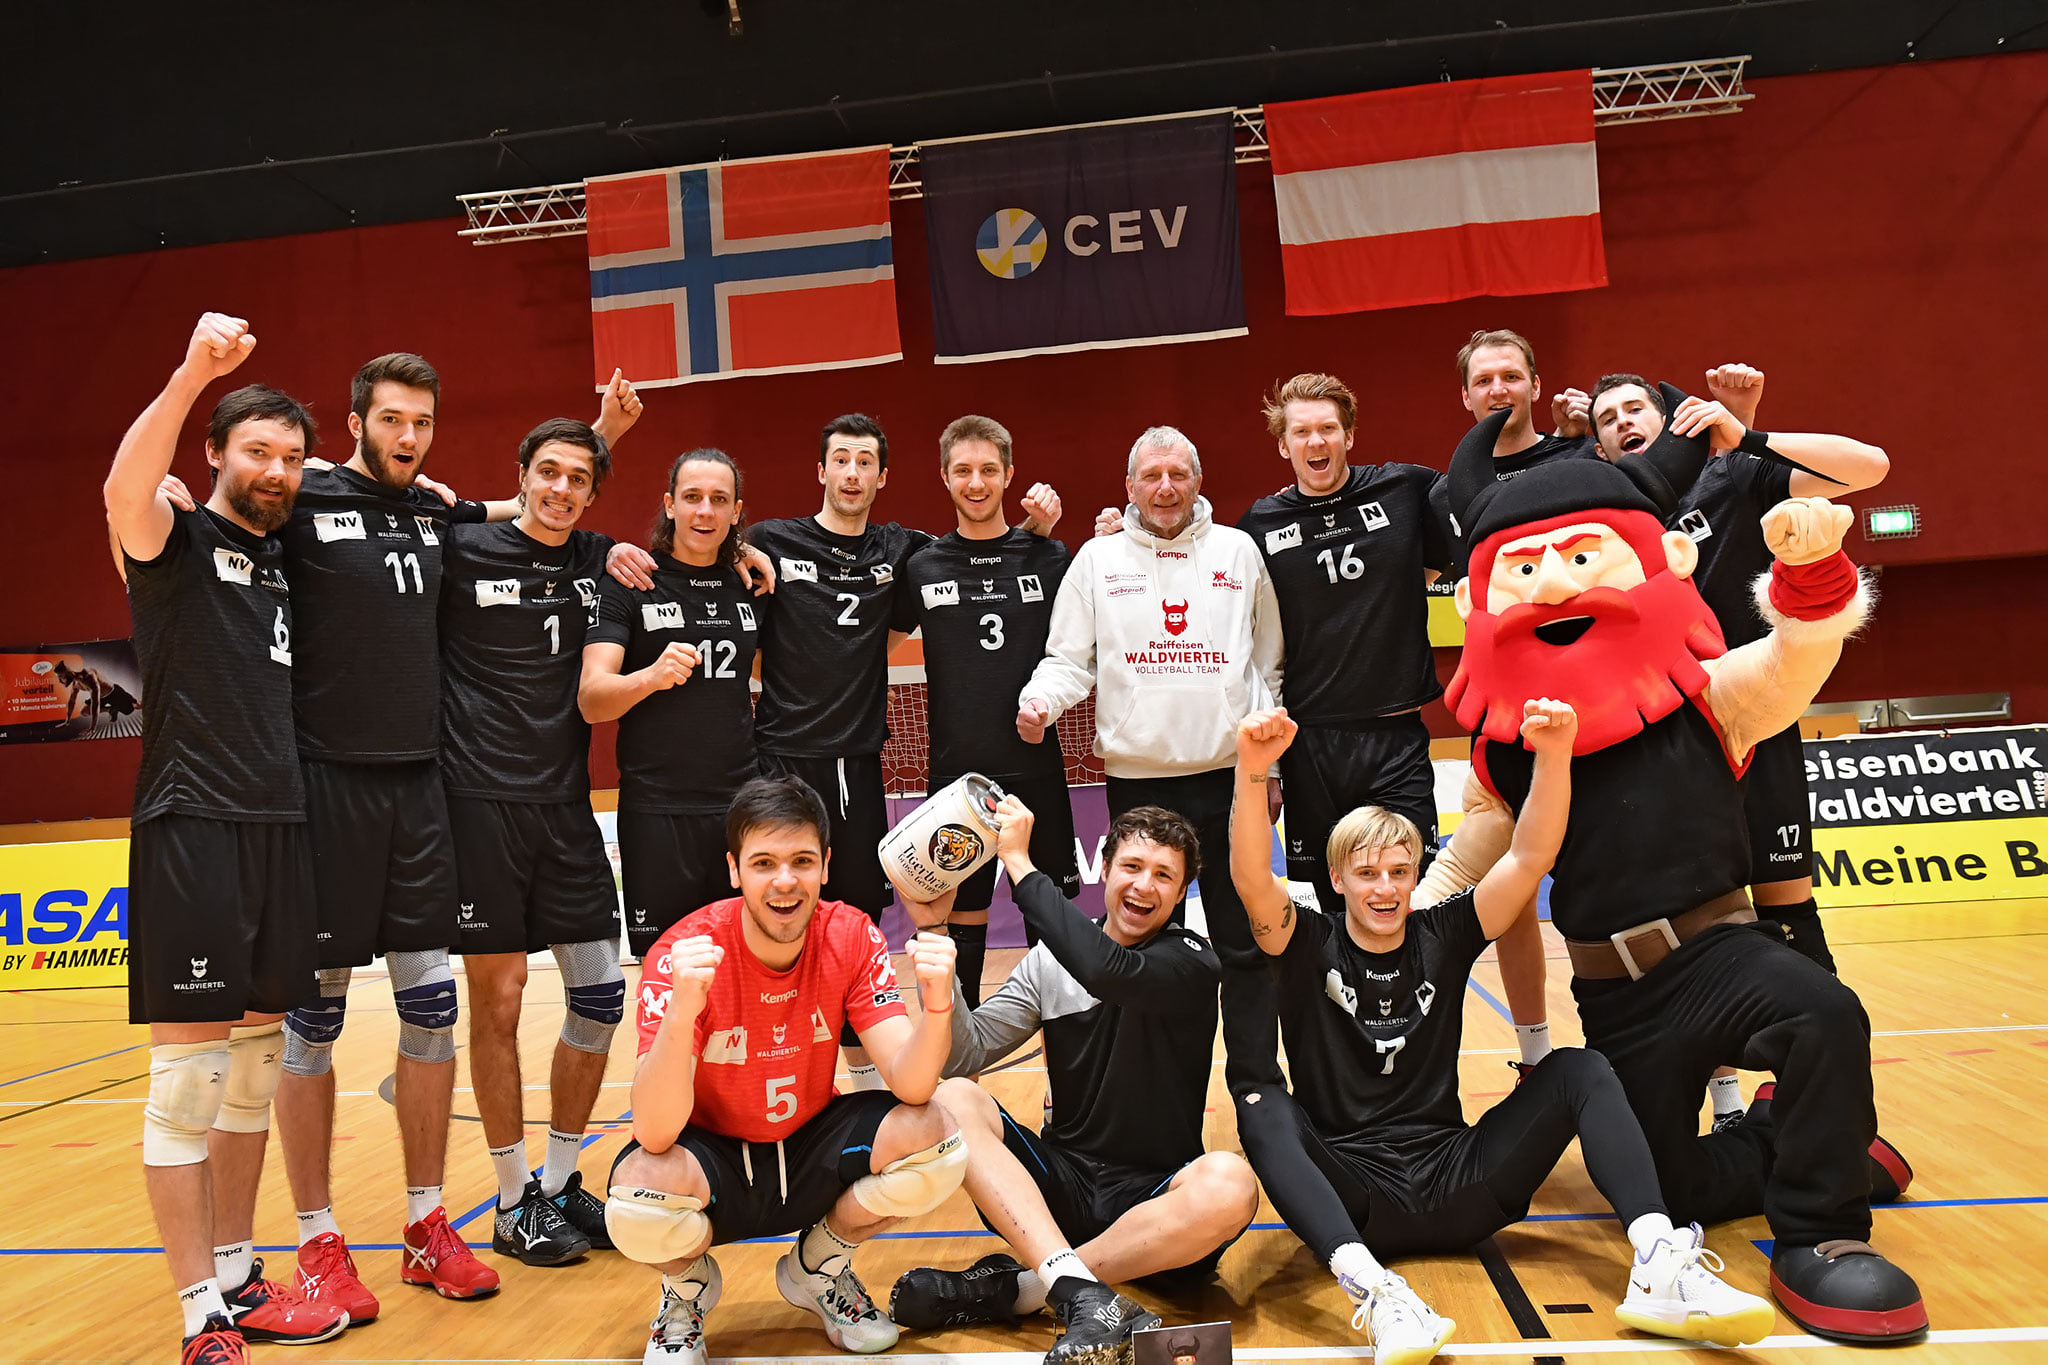 Solid Knašas hjalp laget sitt med å nå den åttende finalen i CEV Challenge Cup